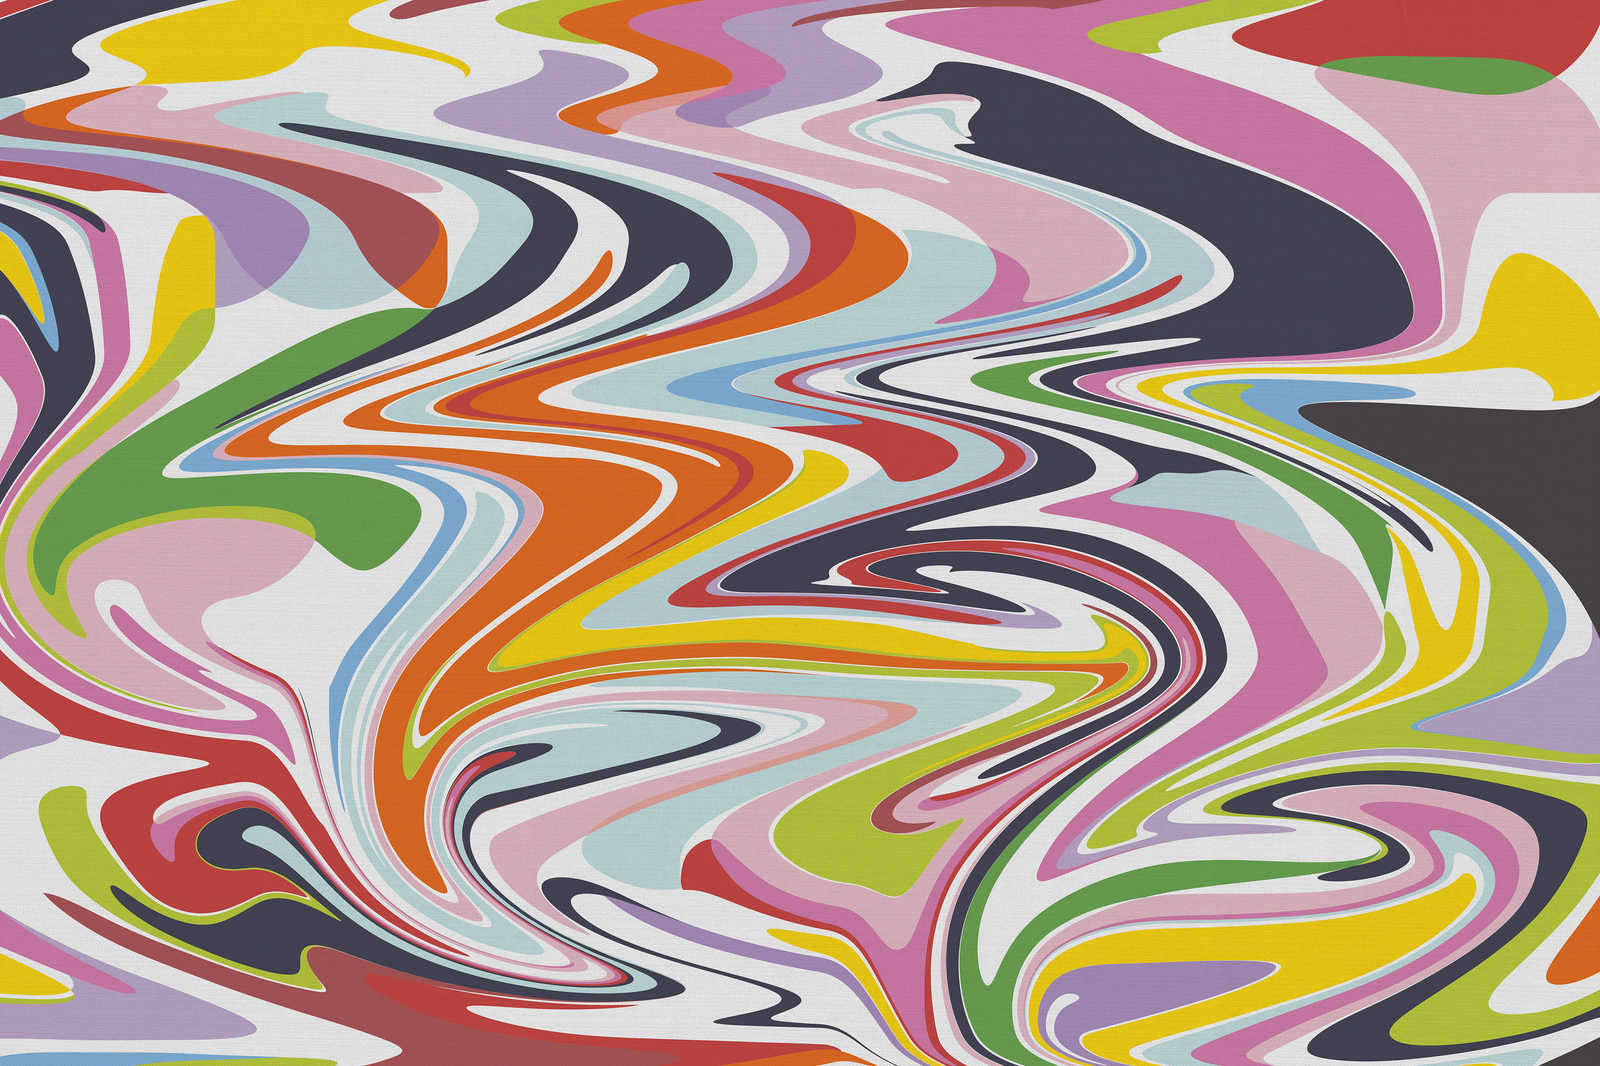             Leinwandbild abstraktes Farbgemisch buntes Muster – 0,90 m x 0,60 m
        